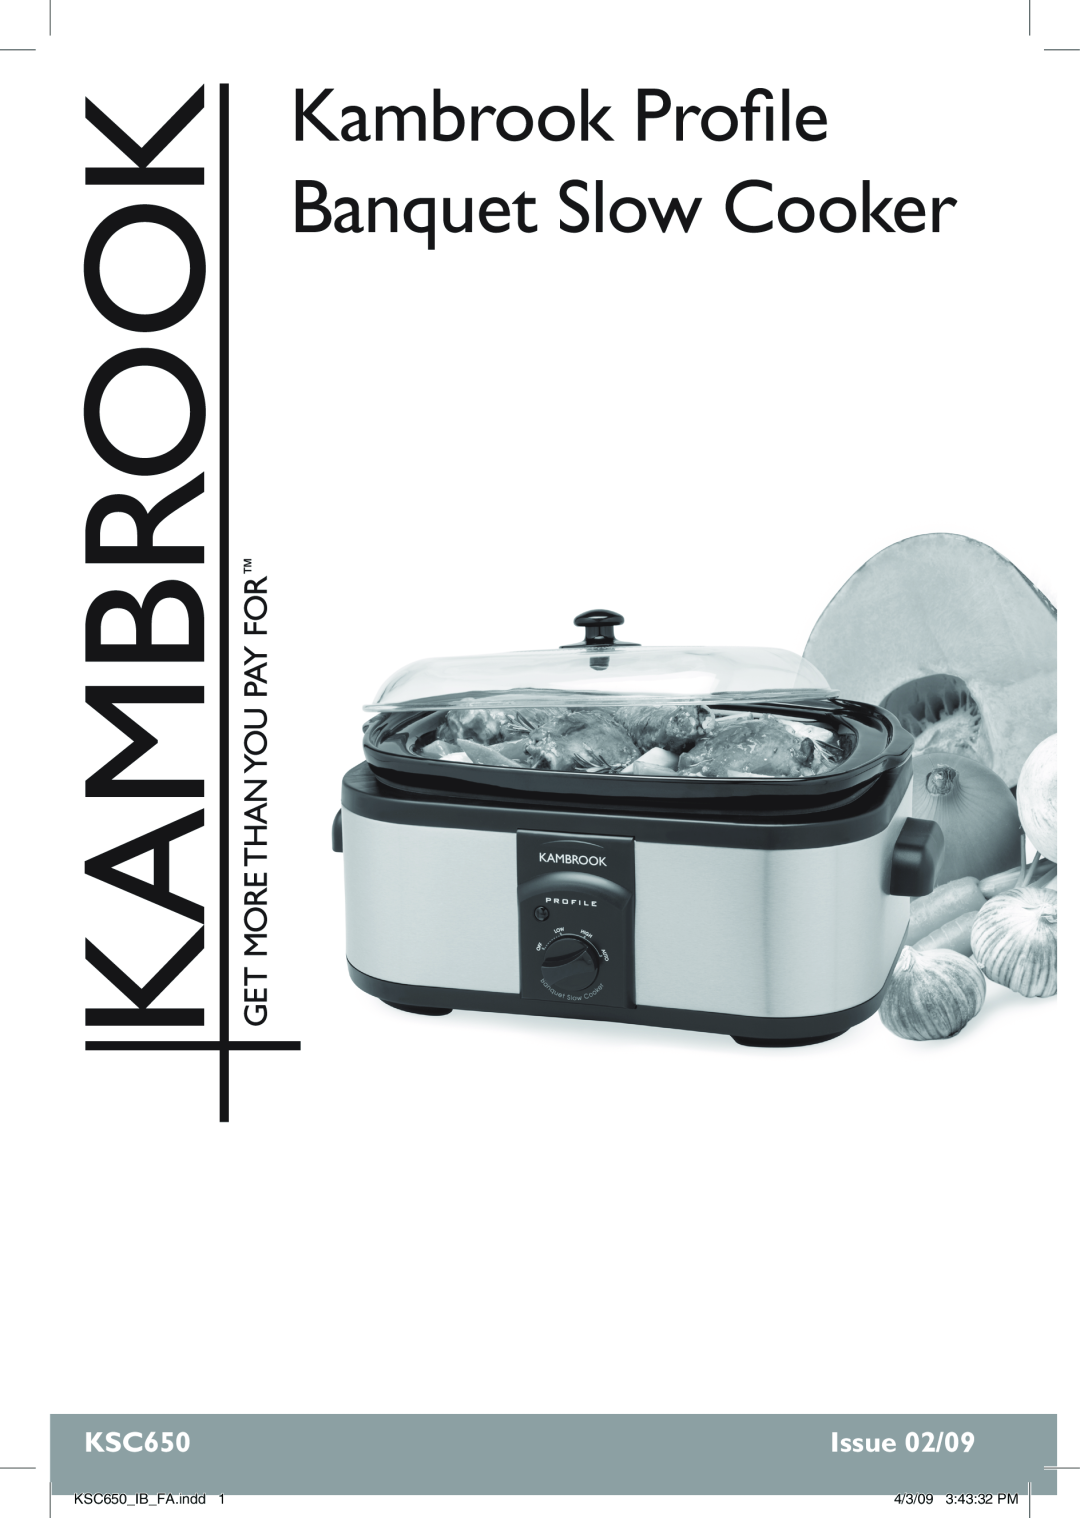 Kambrook manual Kambrook Profile Banquet Slow Cooker, Issue 02/09, KSC650IBFA.indd, 4/3/09 34332 PM 